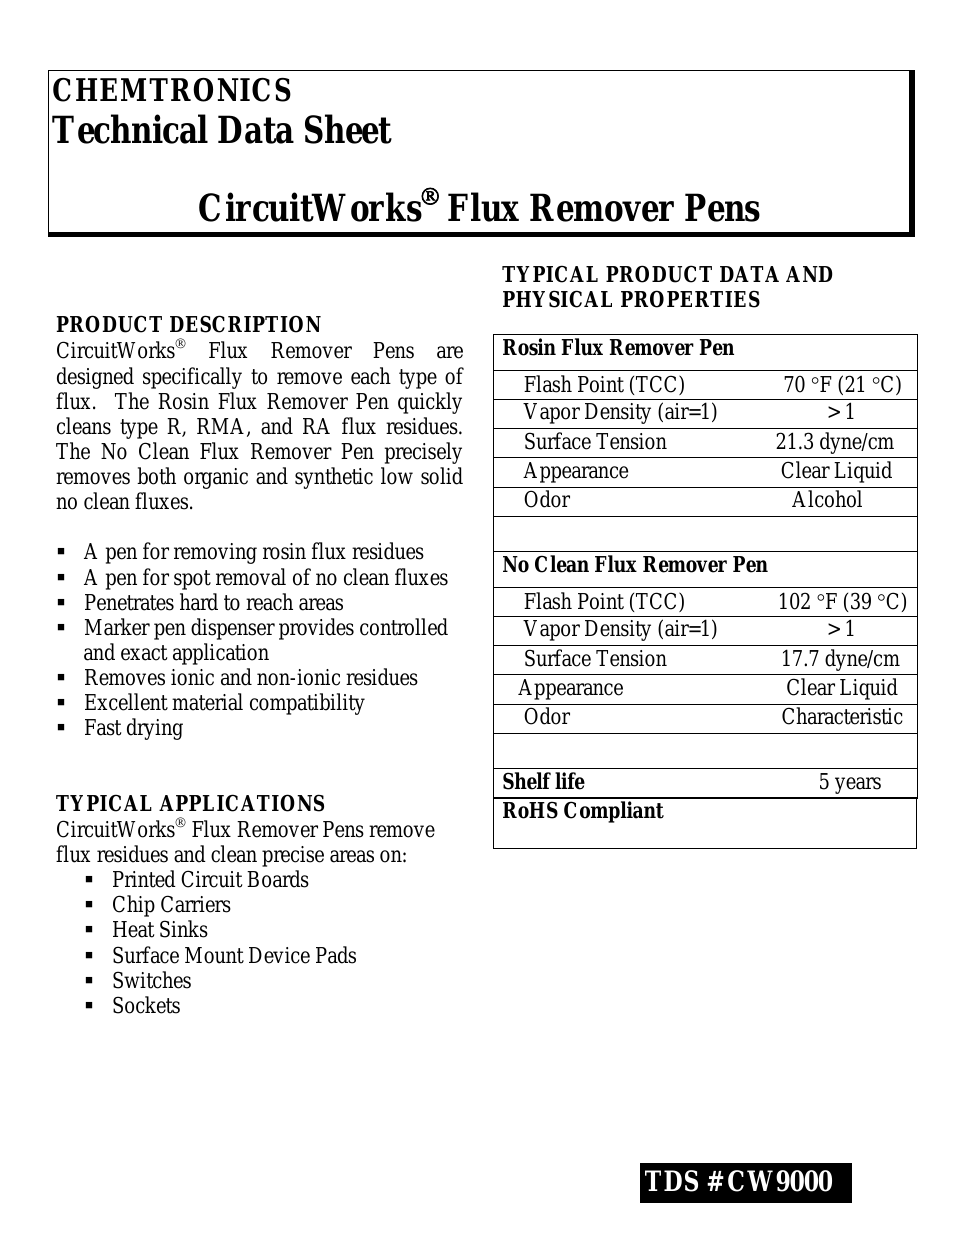 CircuitWorks® No Clean Flux Remover Pen CW9100